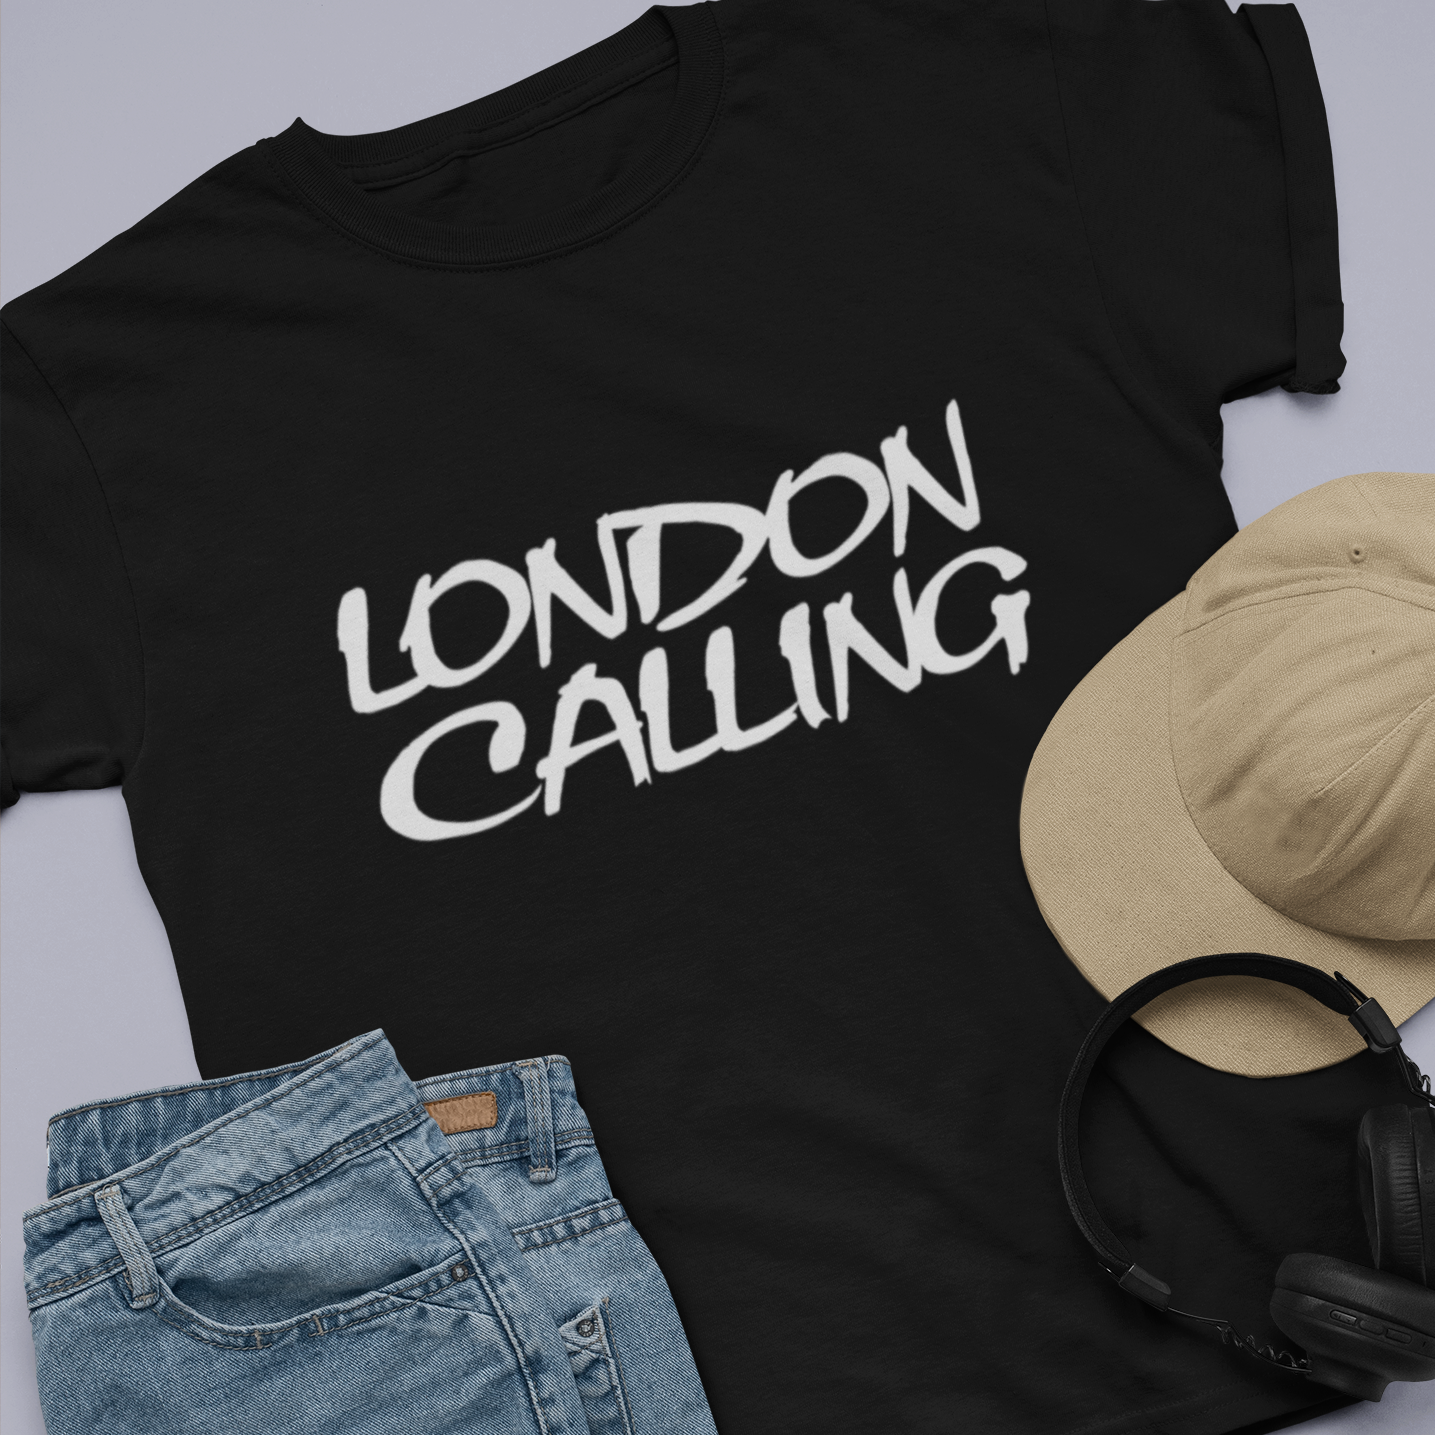 THE CLASH "London Calling" t-shirt